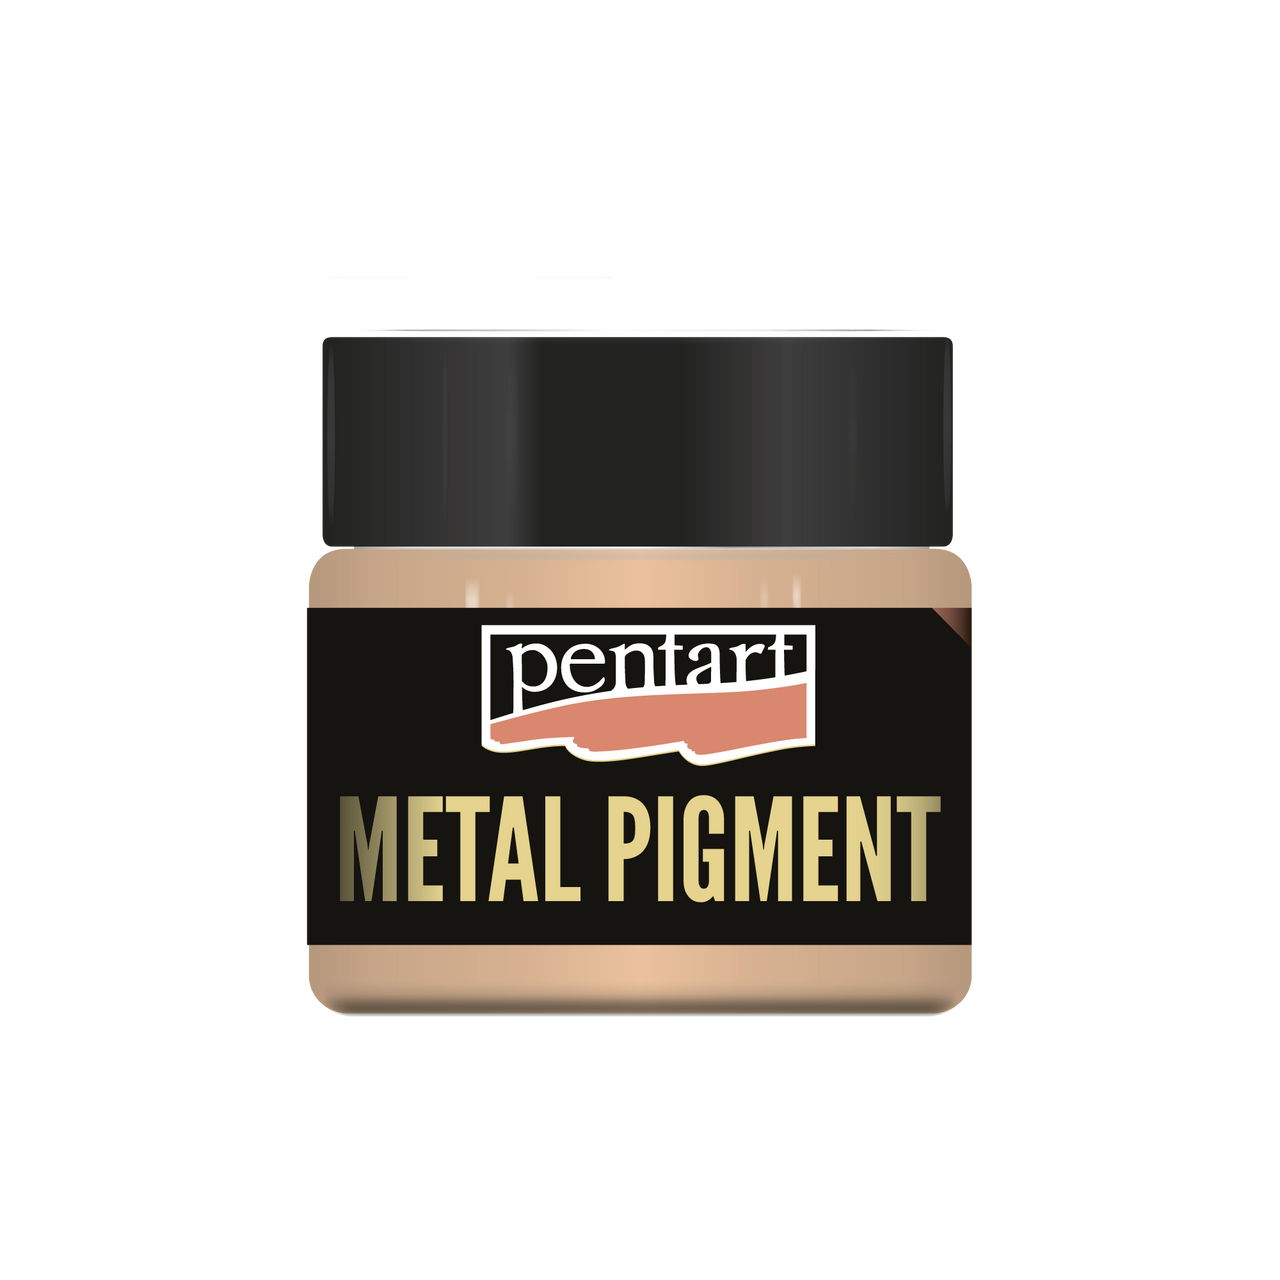 Metal Pigment - Pentart